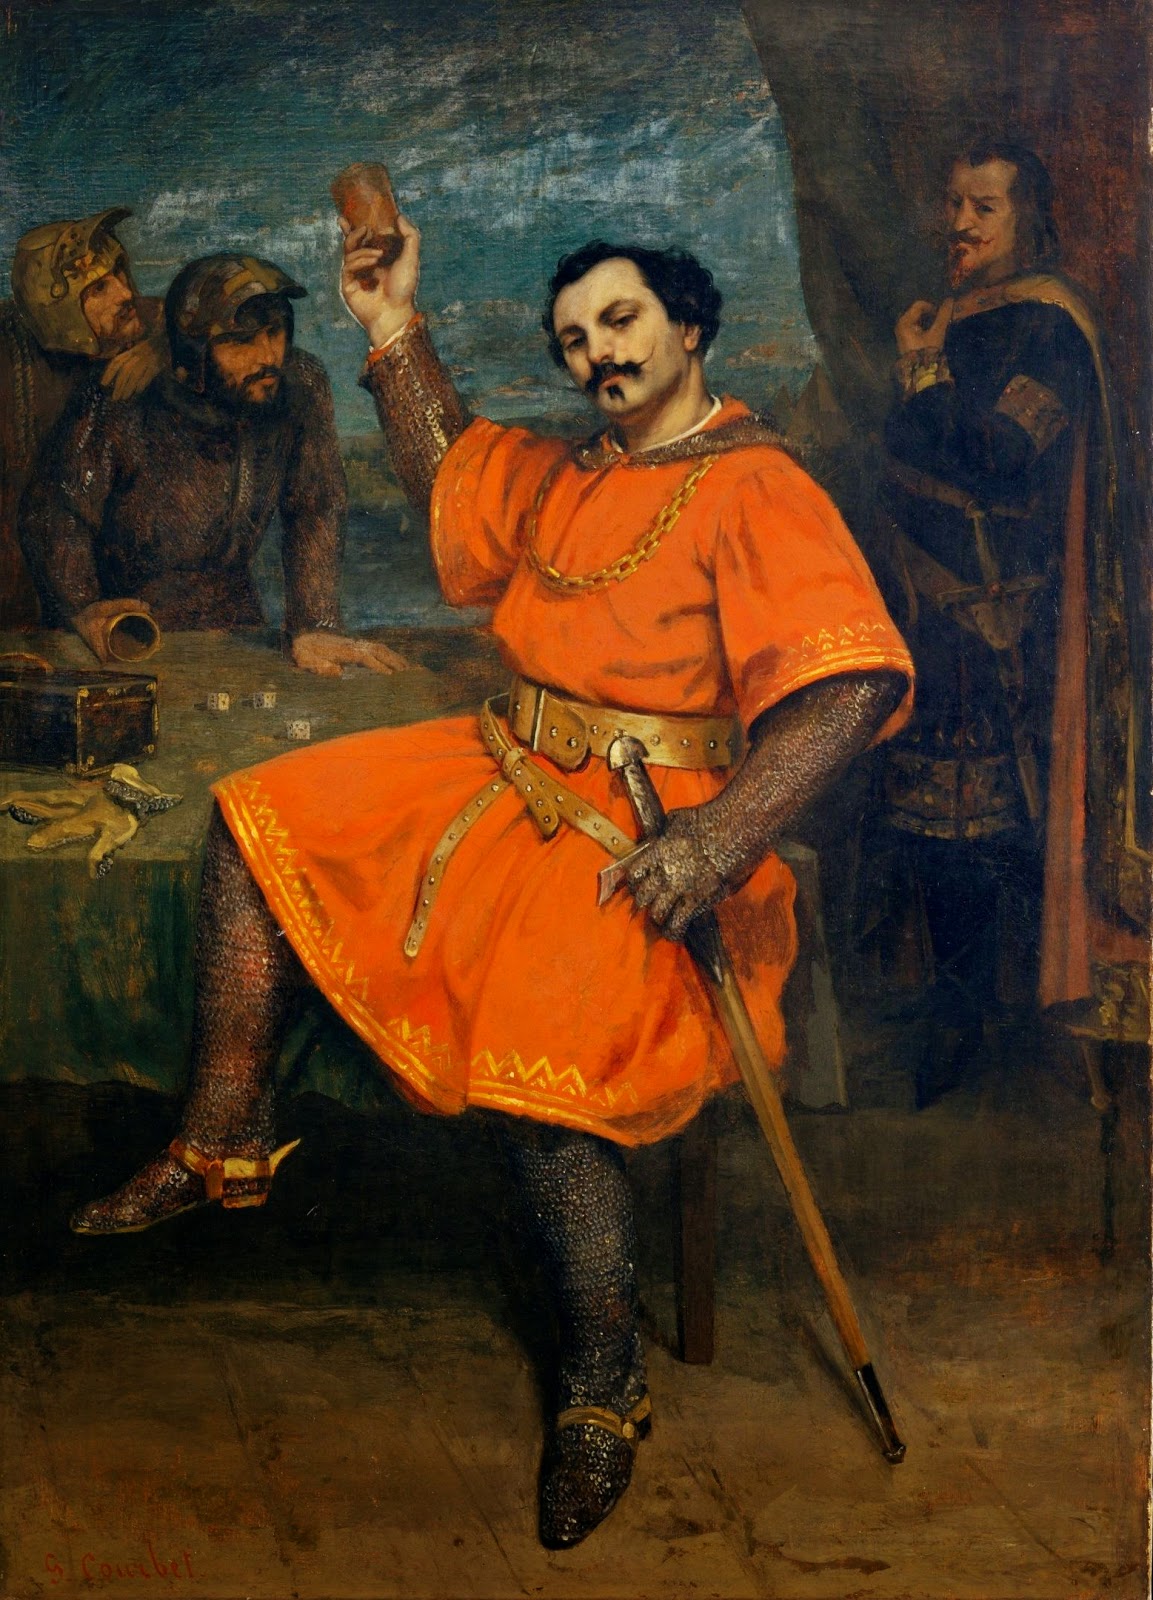 Gustave+Courbet-1819-1877 (32).jpg